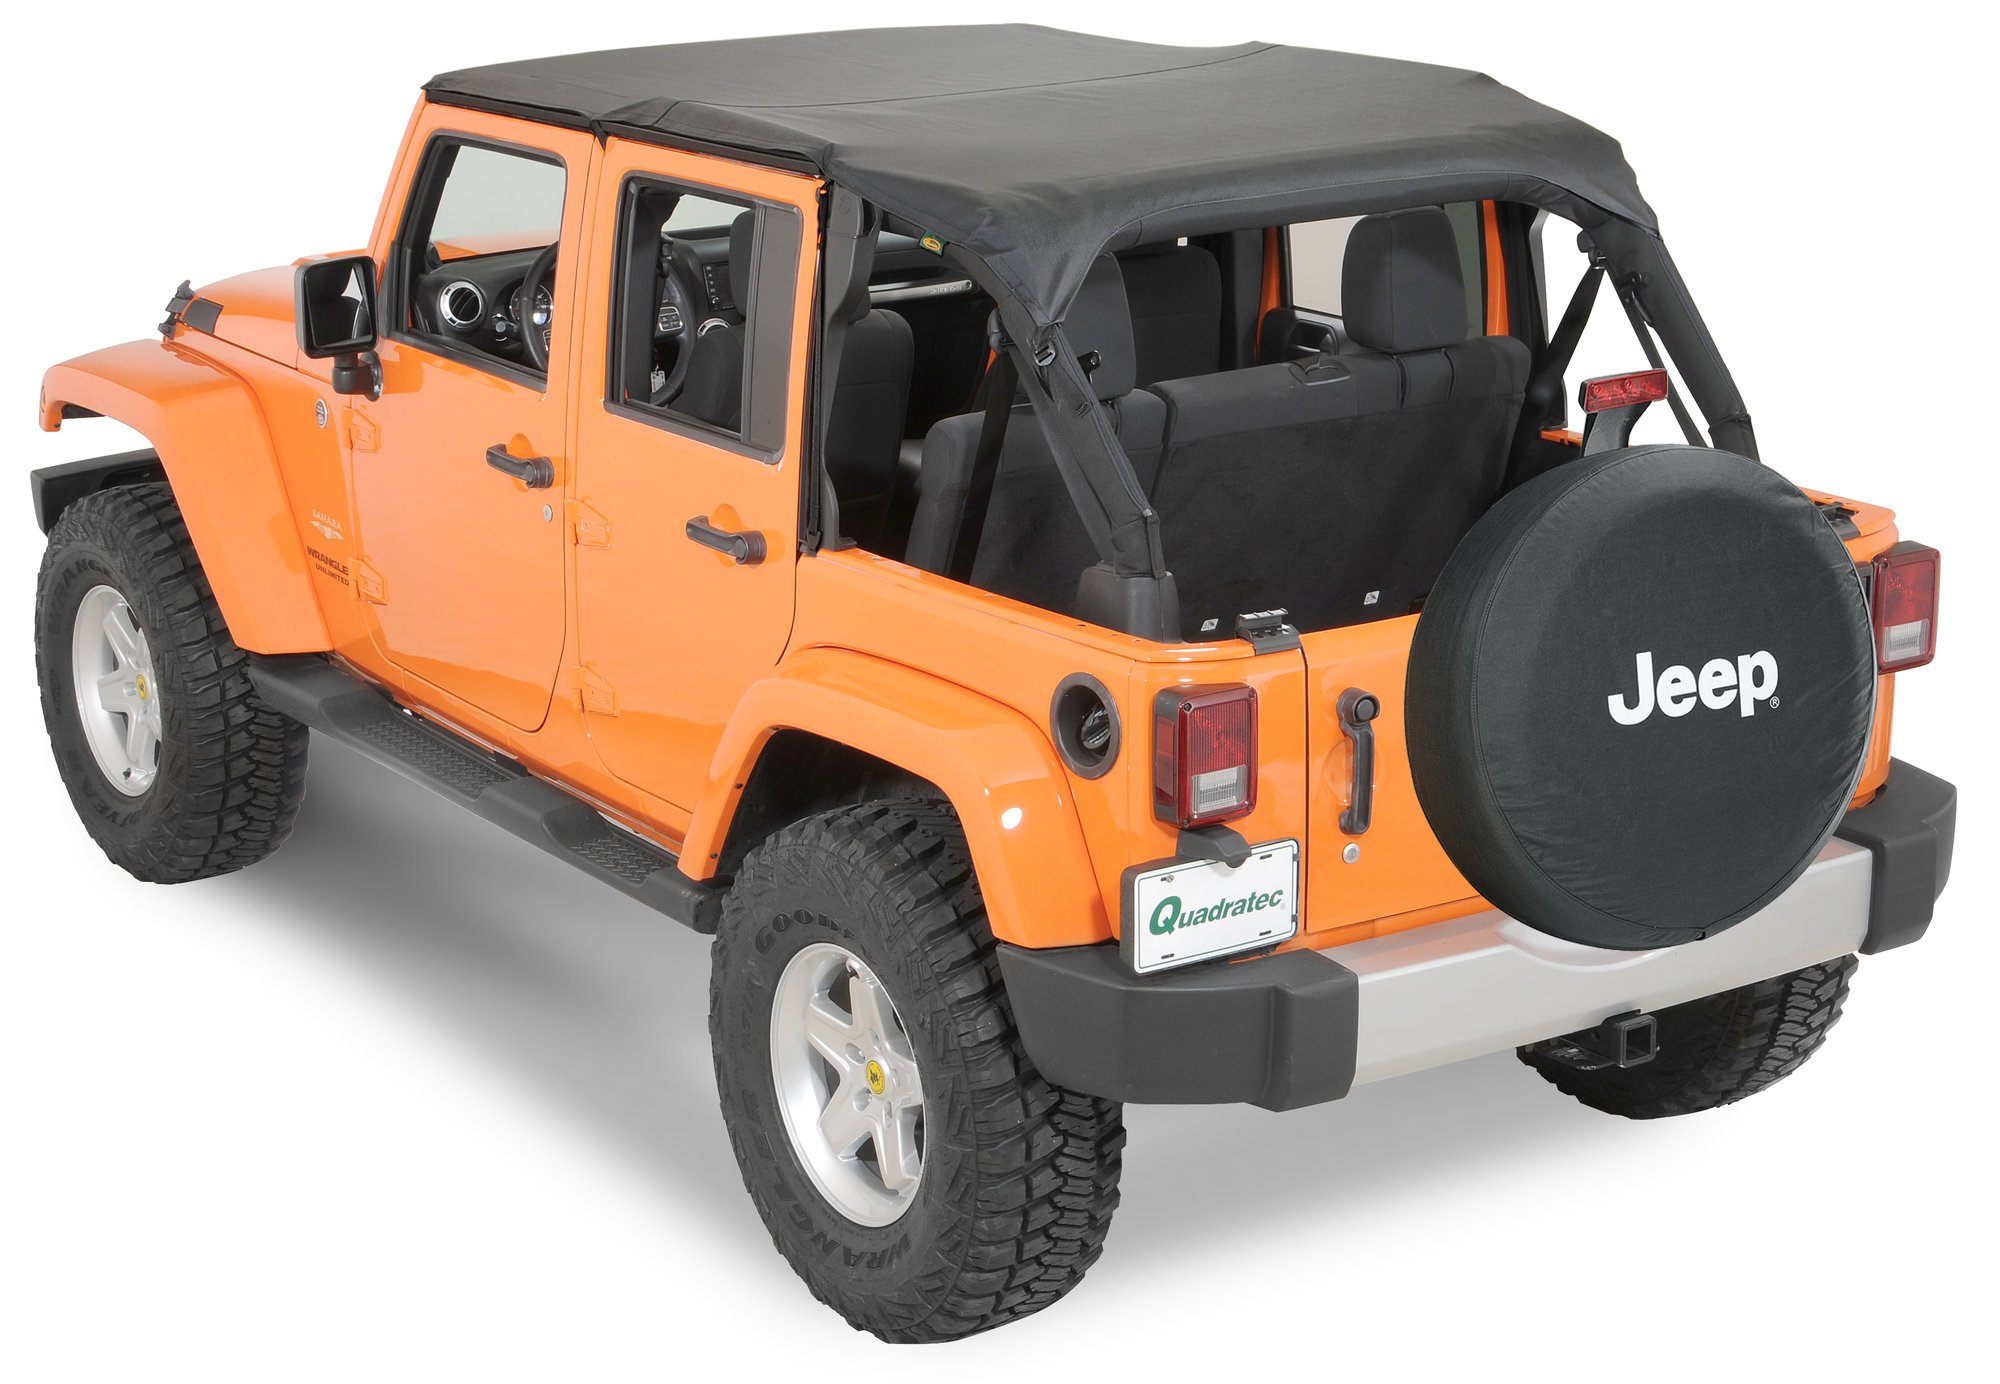 QuadraTop Bimini Top Plus in Black Diamond for 07-18 Jeep Wrangler  Unlimited JK 4 Door | Quadratec